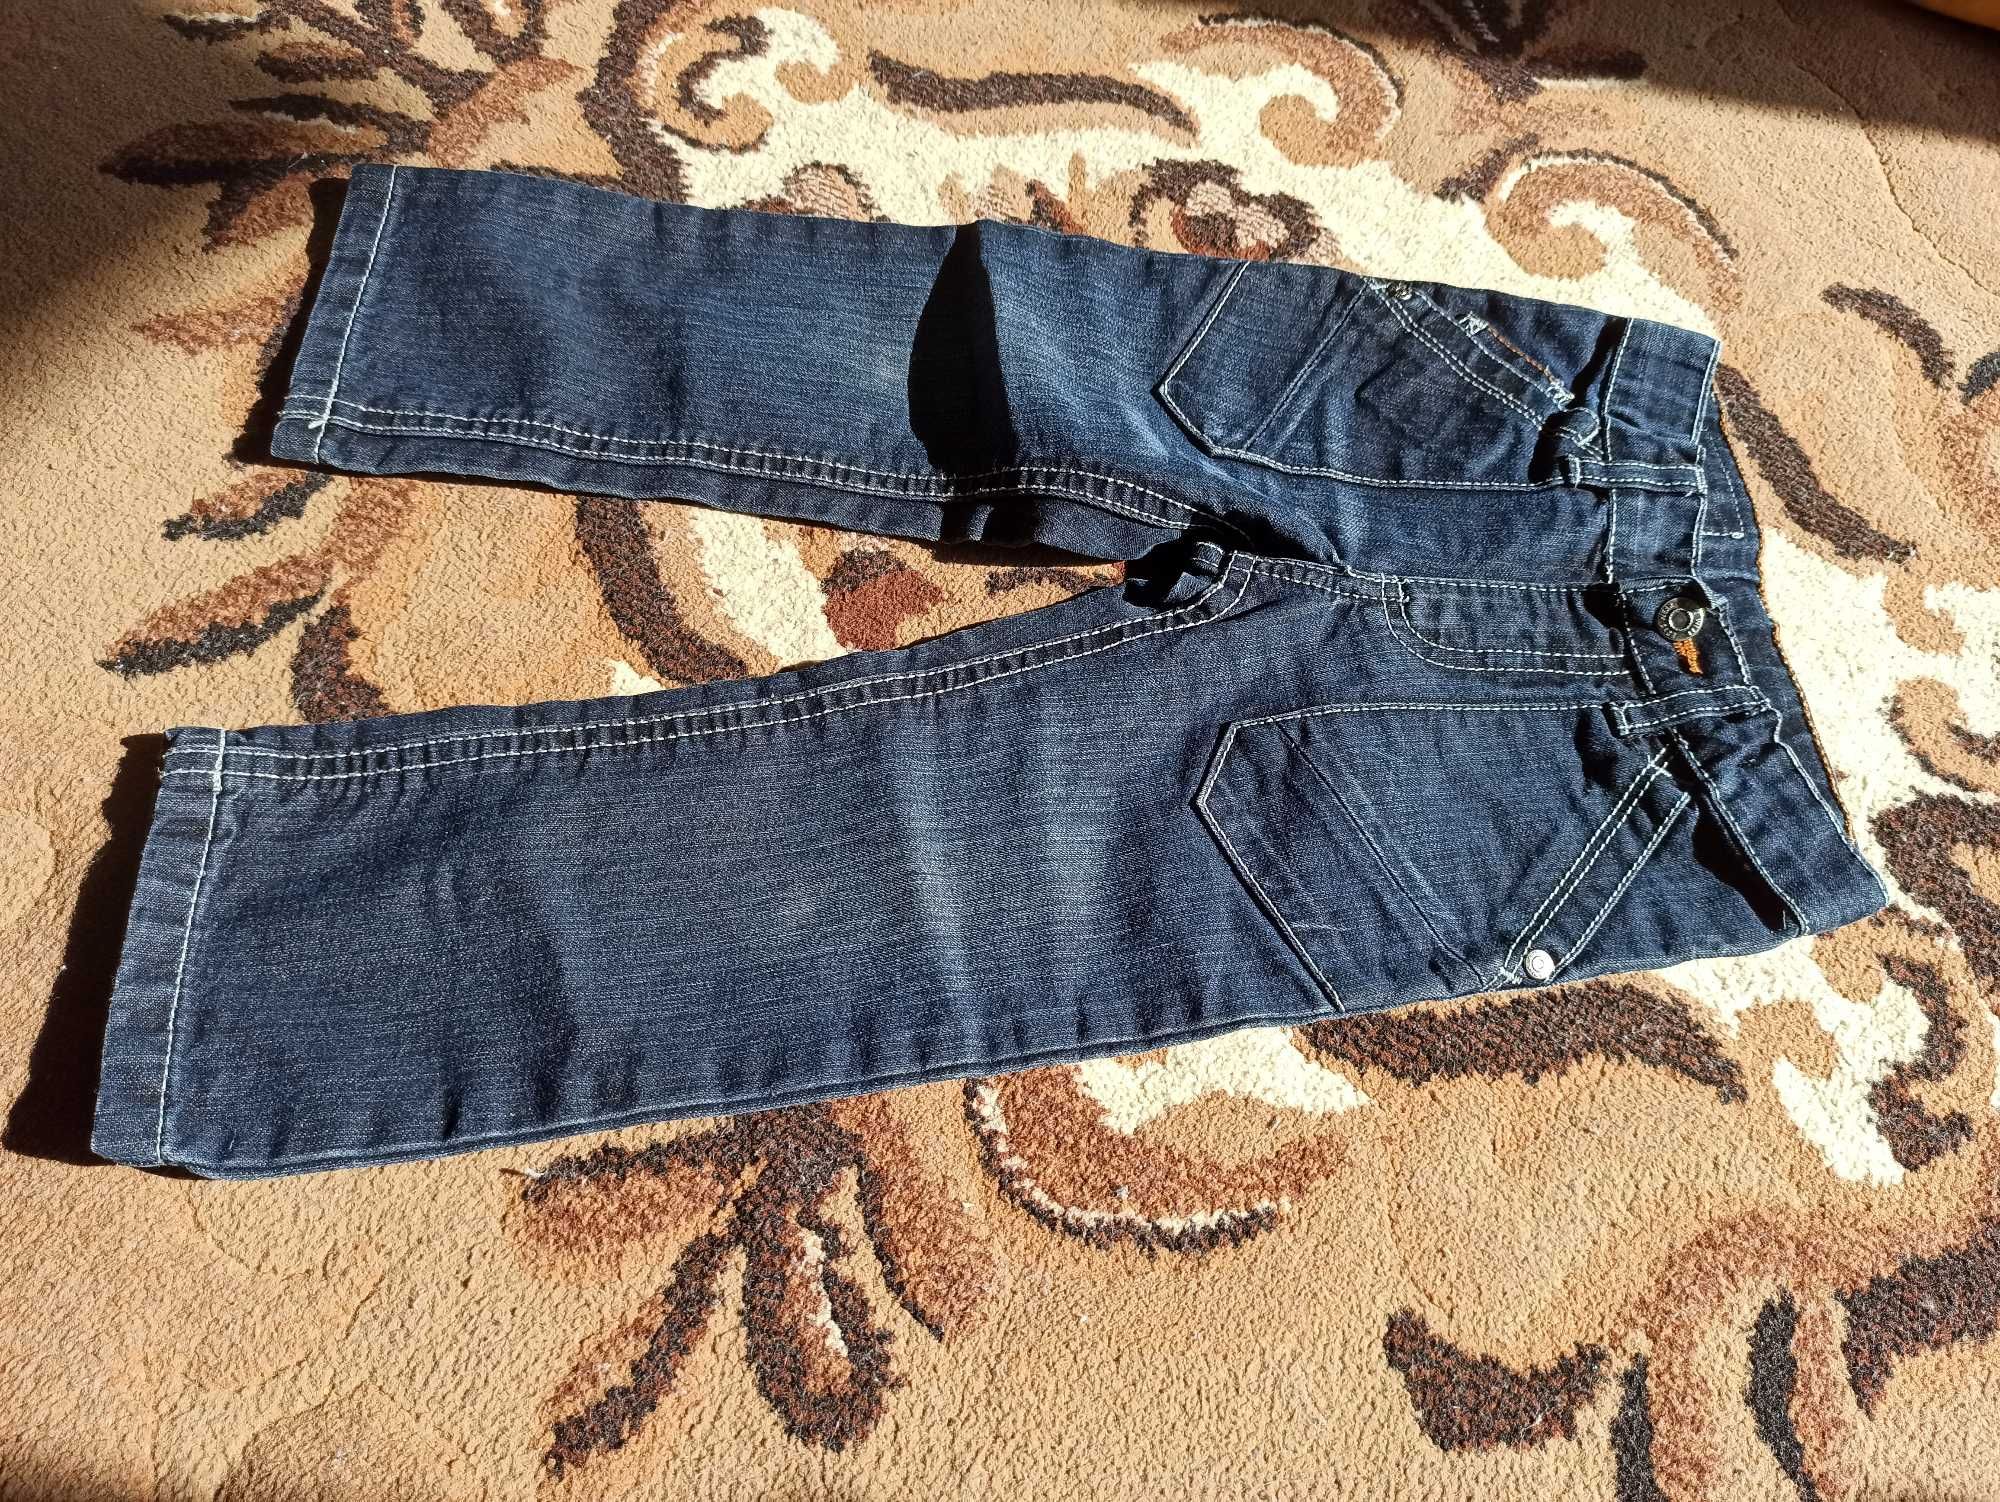 Spodnie jeans rozmiar 92